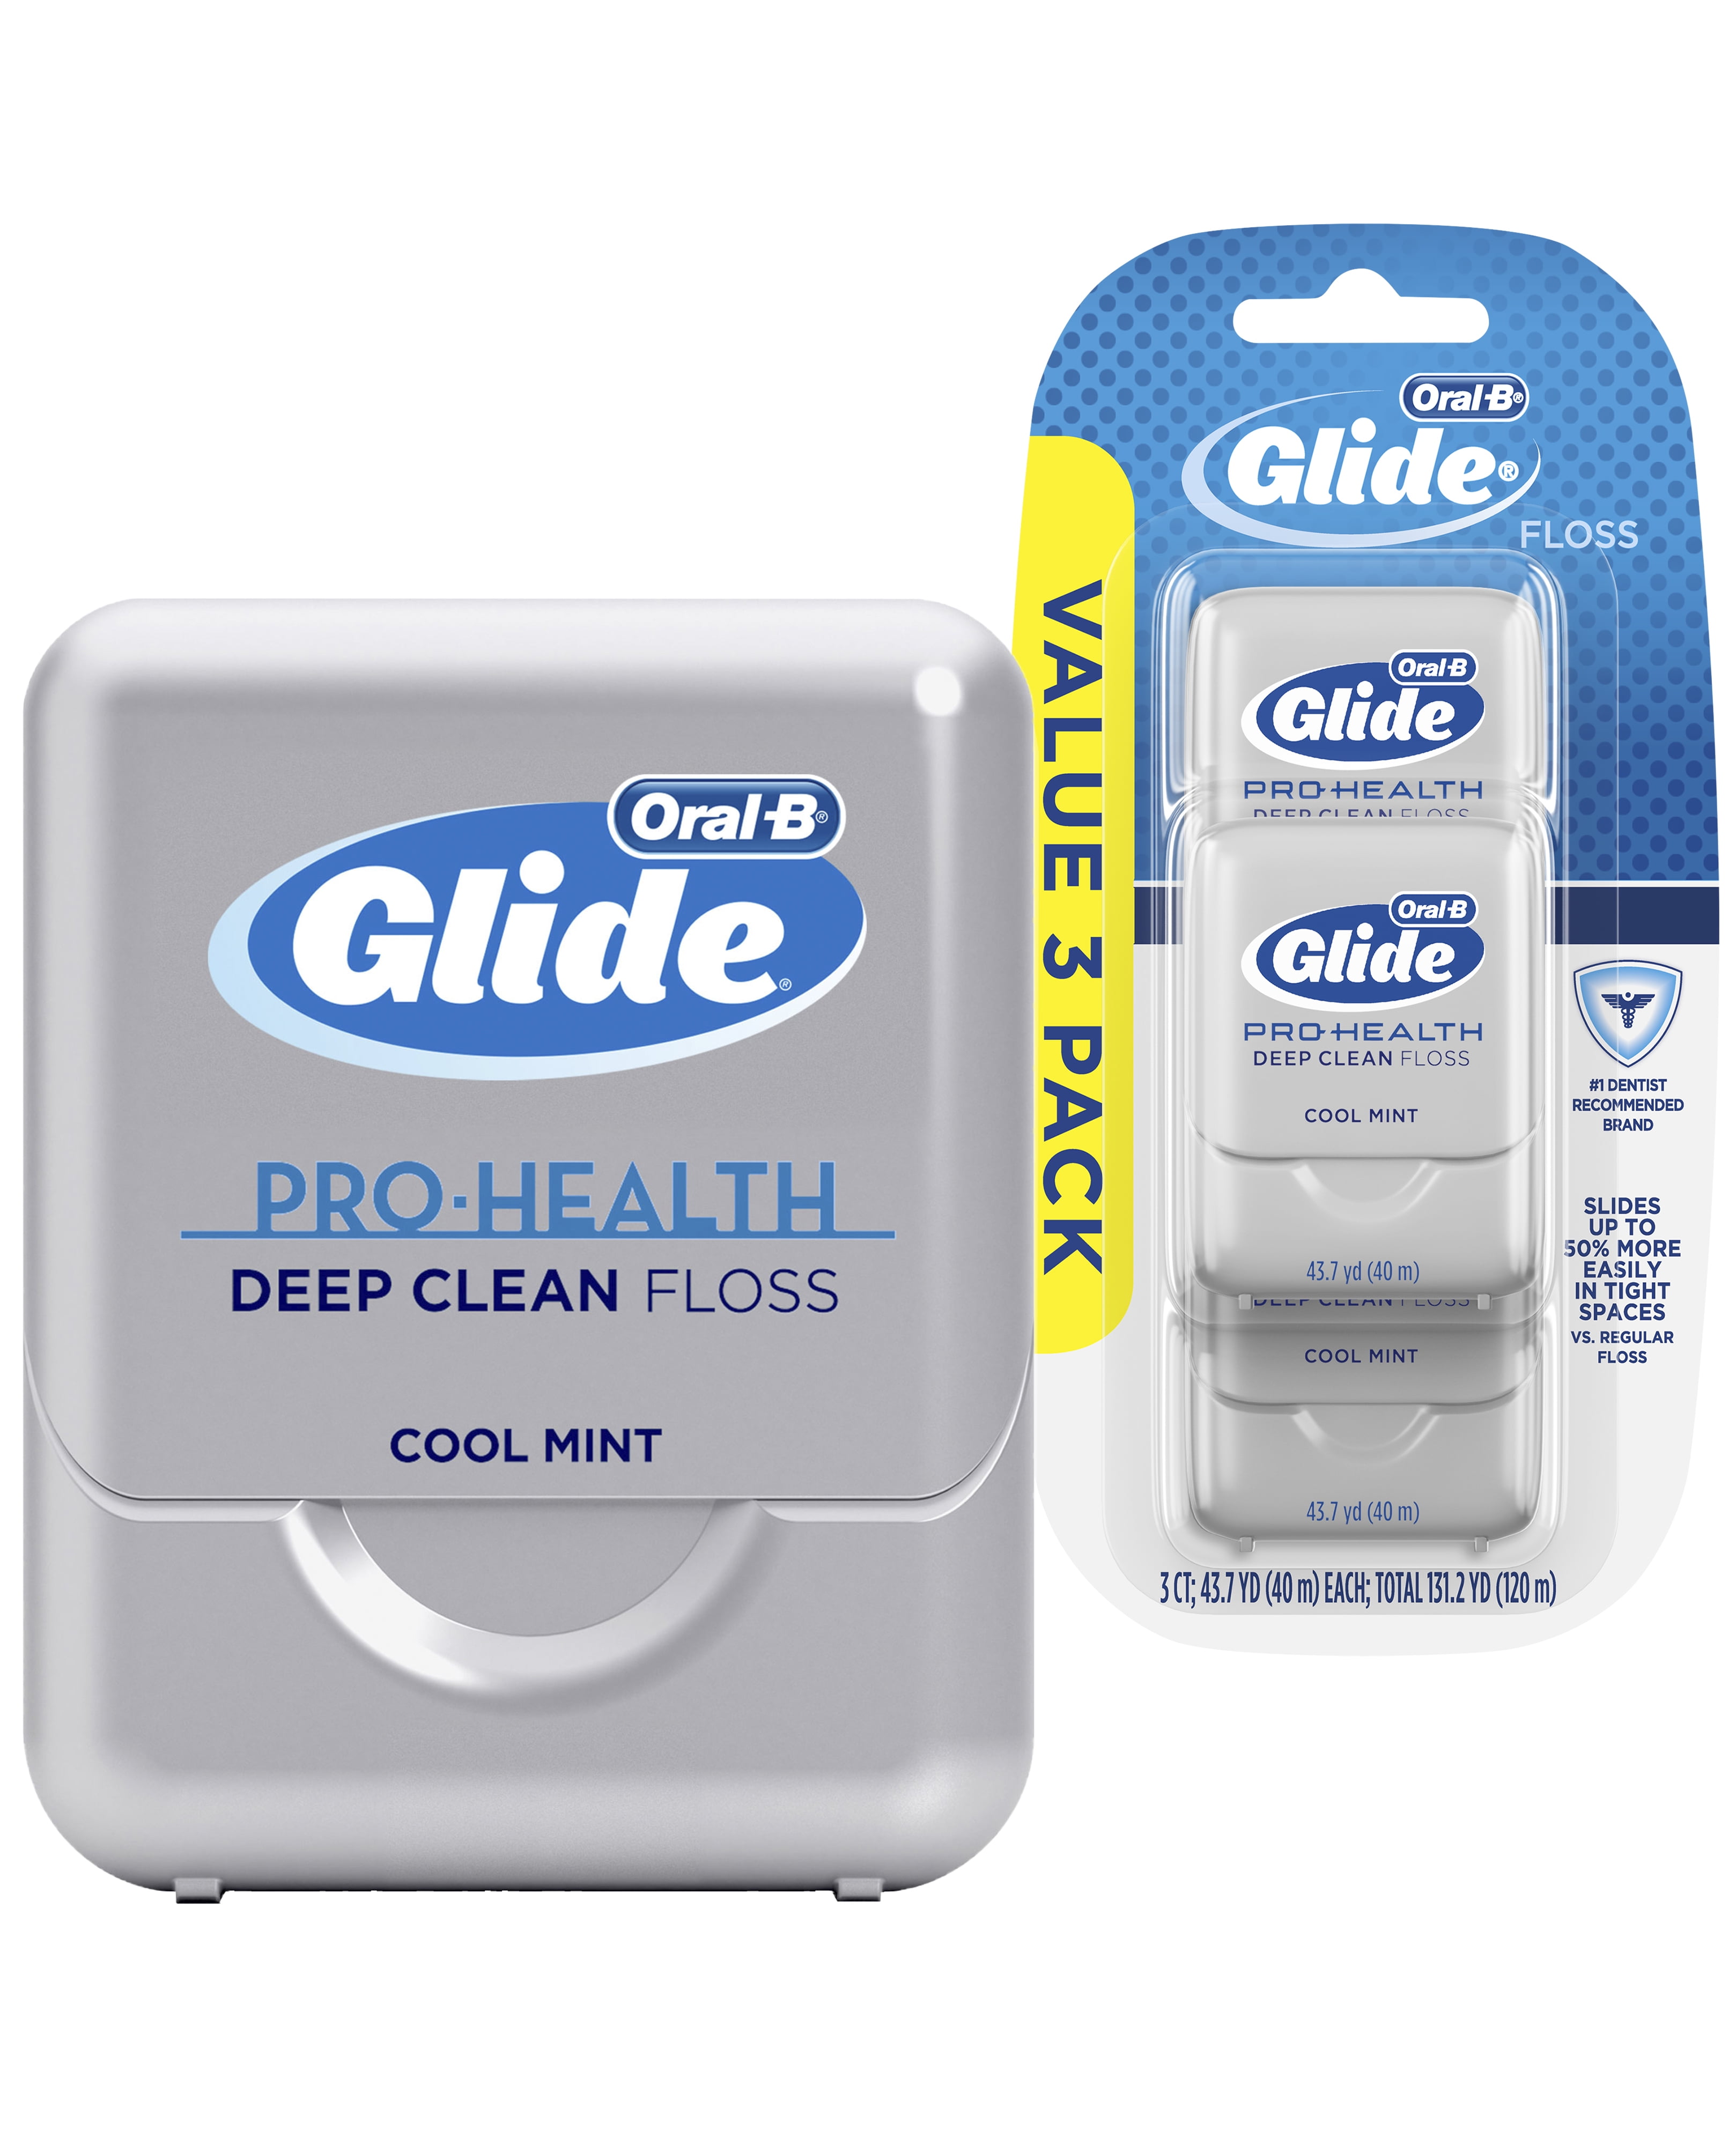 Oral-B Glide Pro-Health Deep Clean Cool Mint Dental Floss, Value 3 Pack (40m Each)